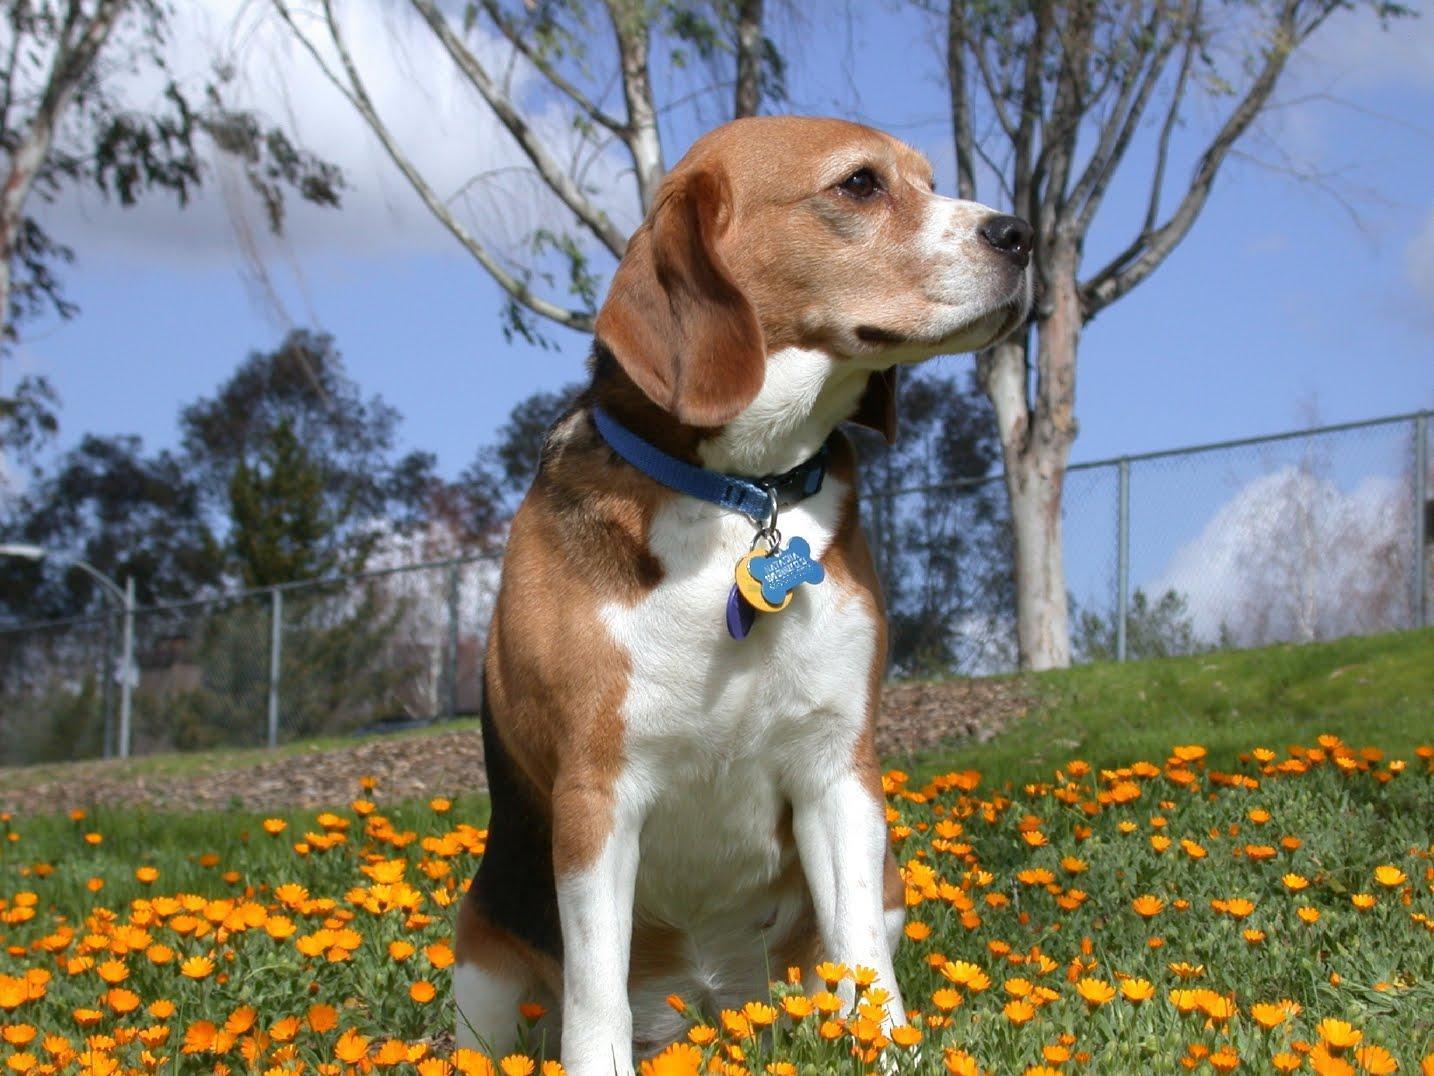 Beagle Puppy wallpaper. Free Animal Wallpaper